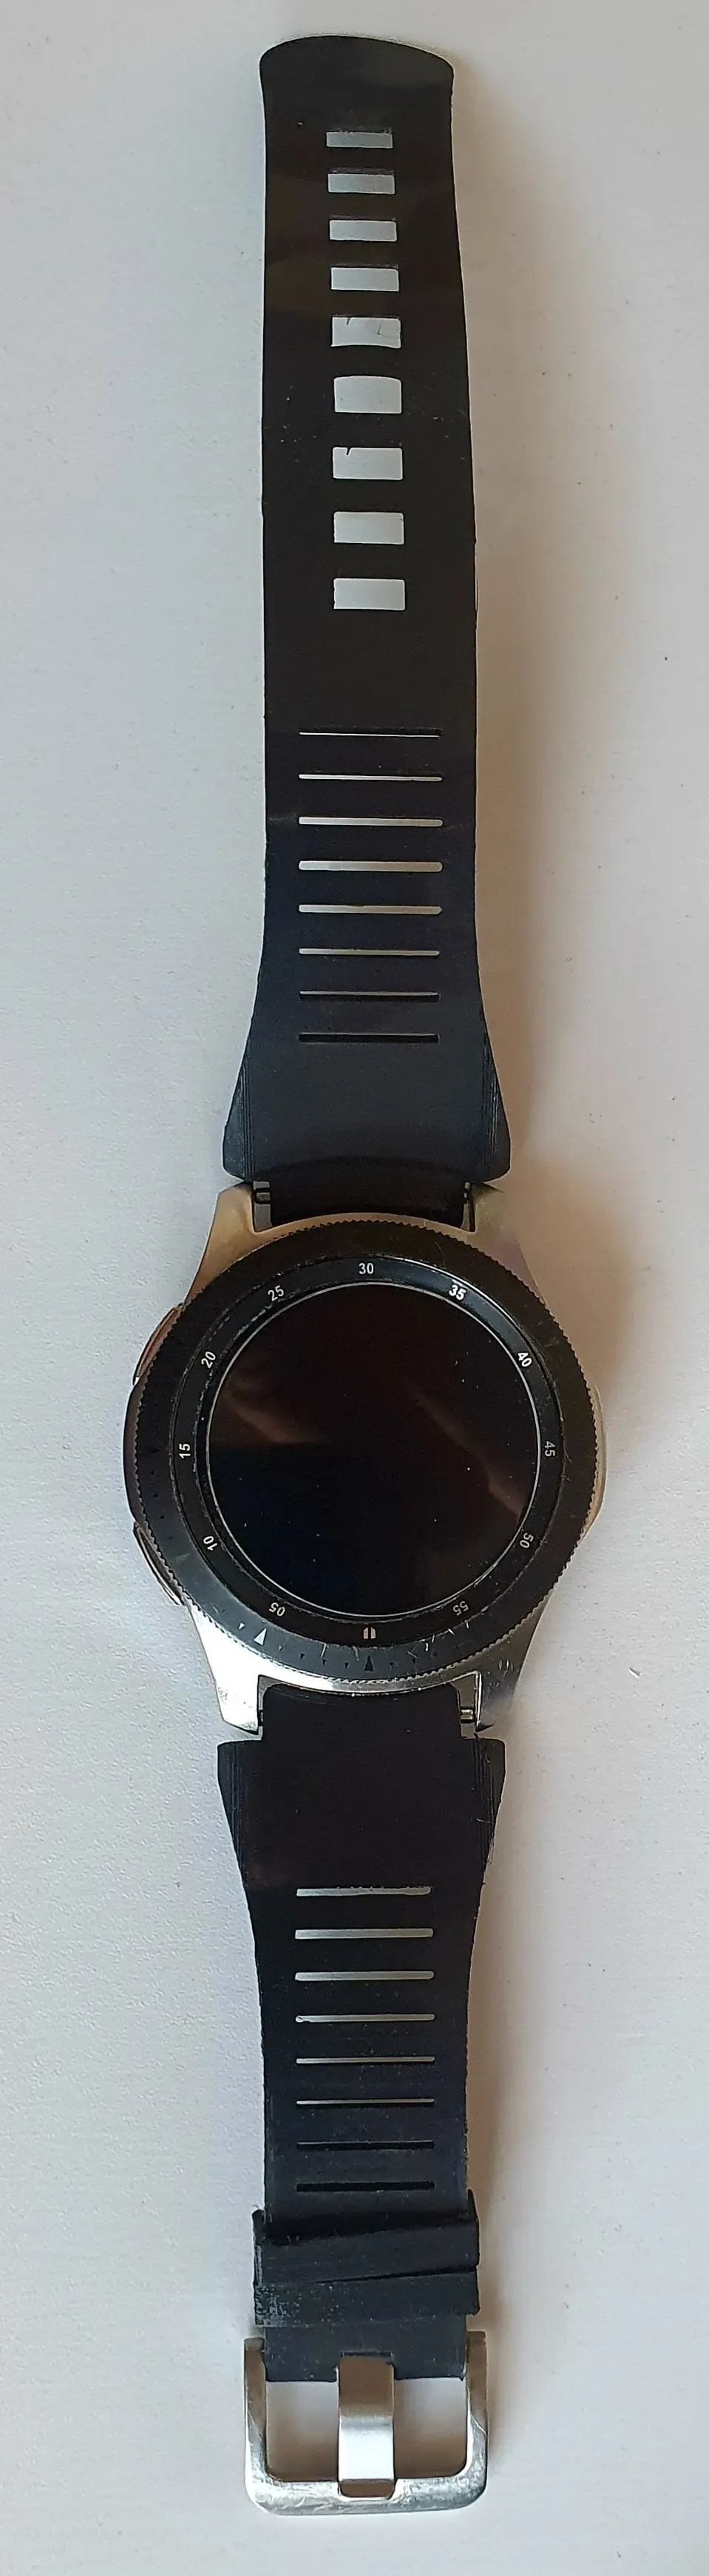 Watch Strap for Samsung Galaxy Watch 46 mm (SM-R800)